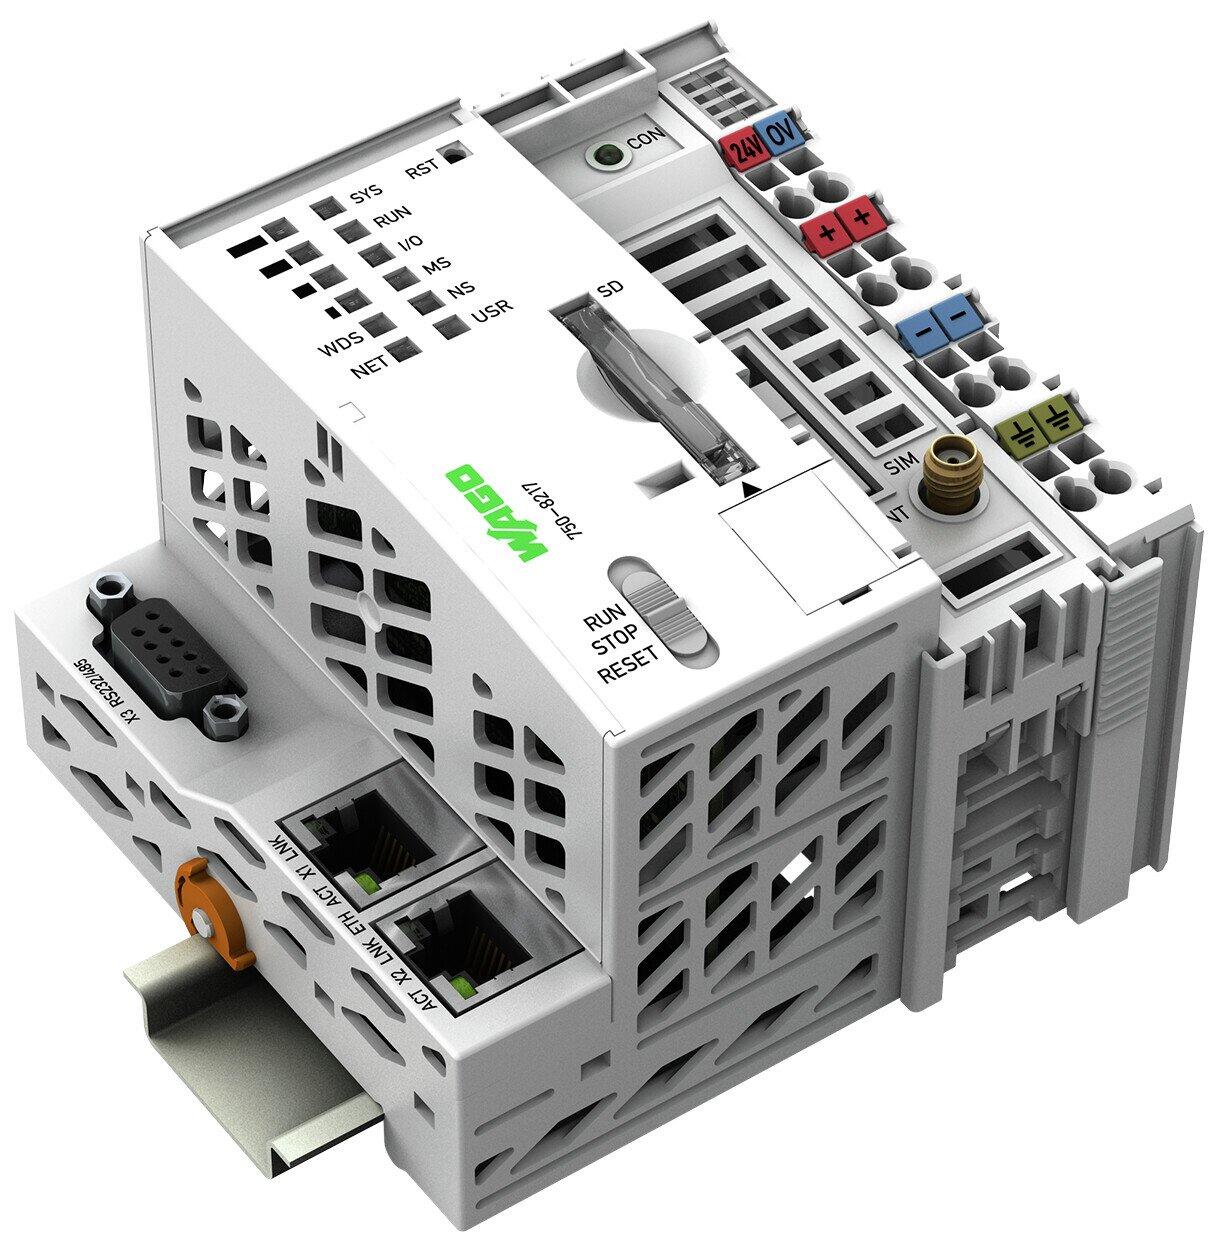 PFC200 控制器; 第 2 代; 2 x ETHERNET, RS-232/-485, 移動無線電模組 4G; EU 版本; 外部溫度